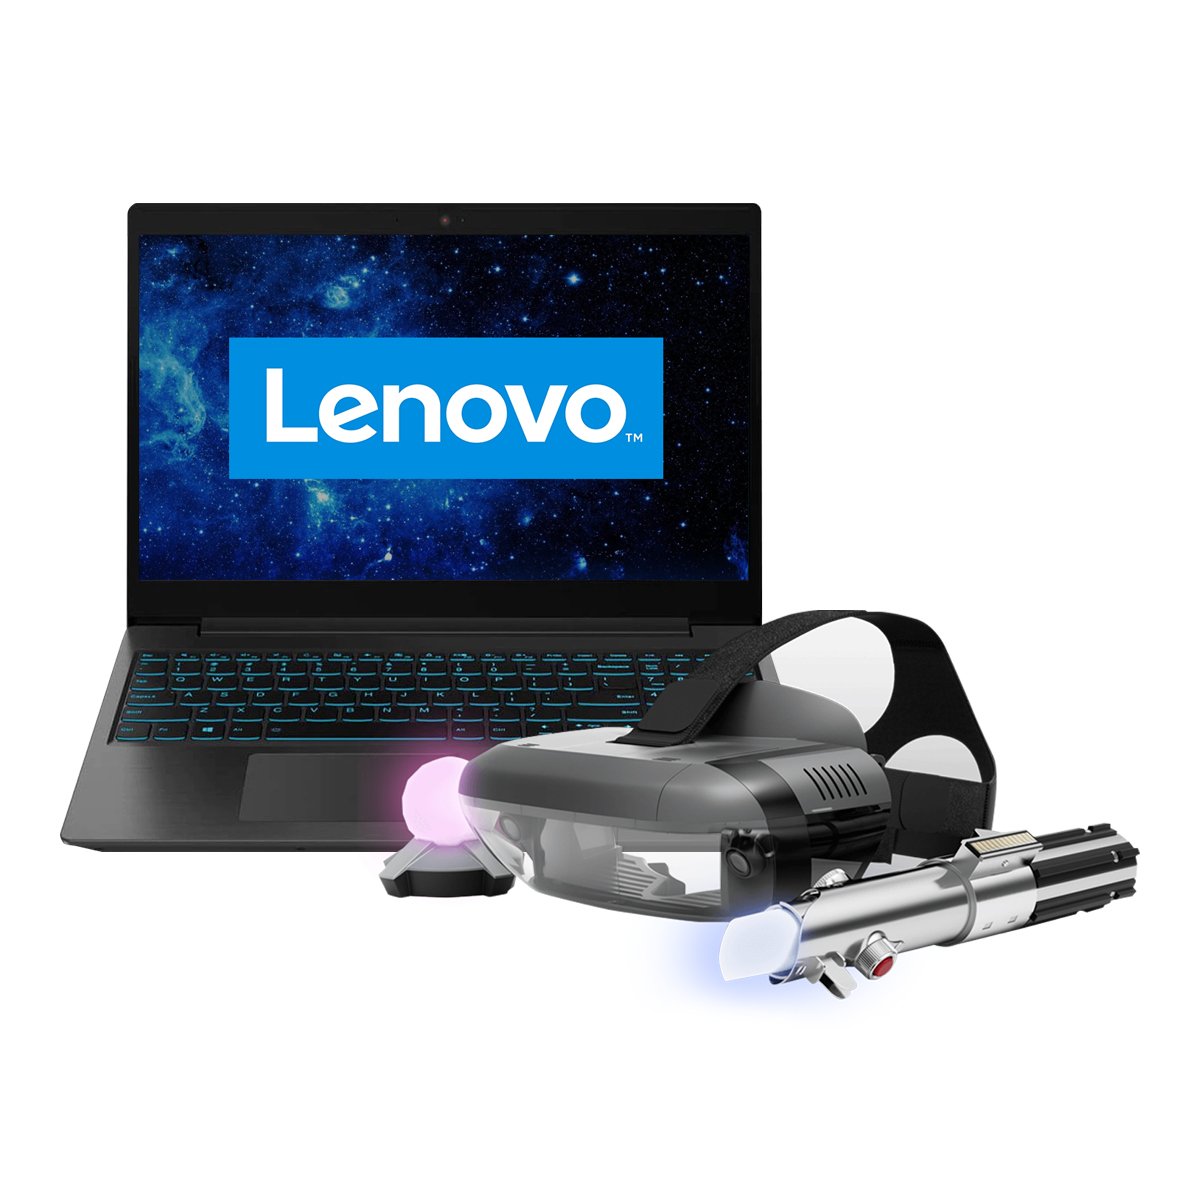 Laptop Gamer Lenovo L340 Geforce Gtx 1050 Ci7 8G 1T 128G + Vr Jedi